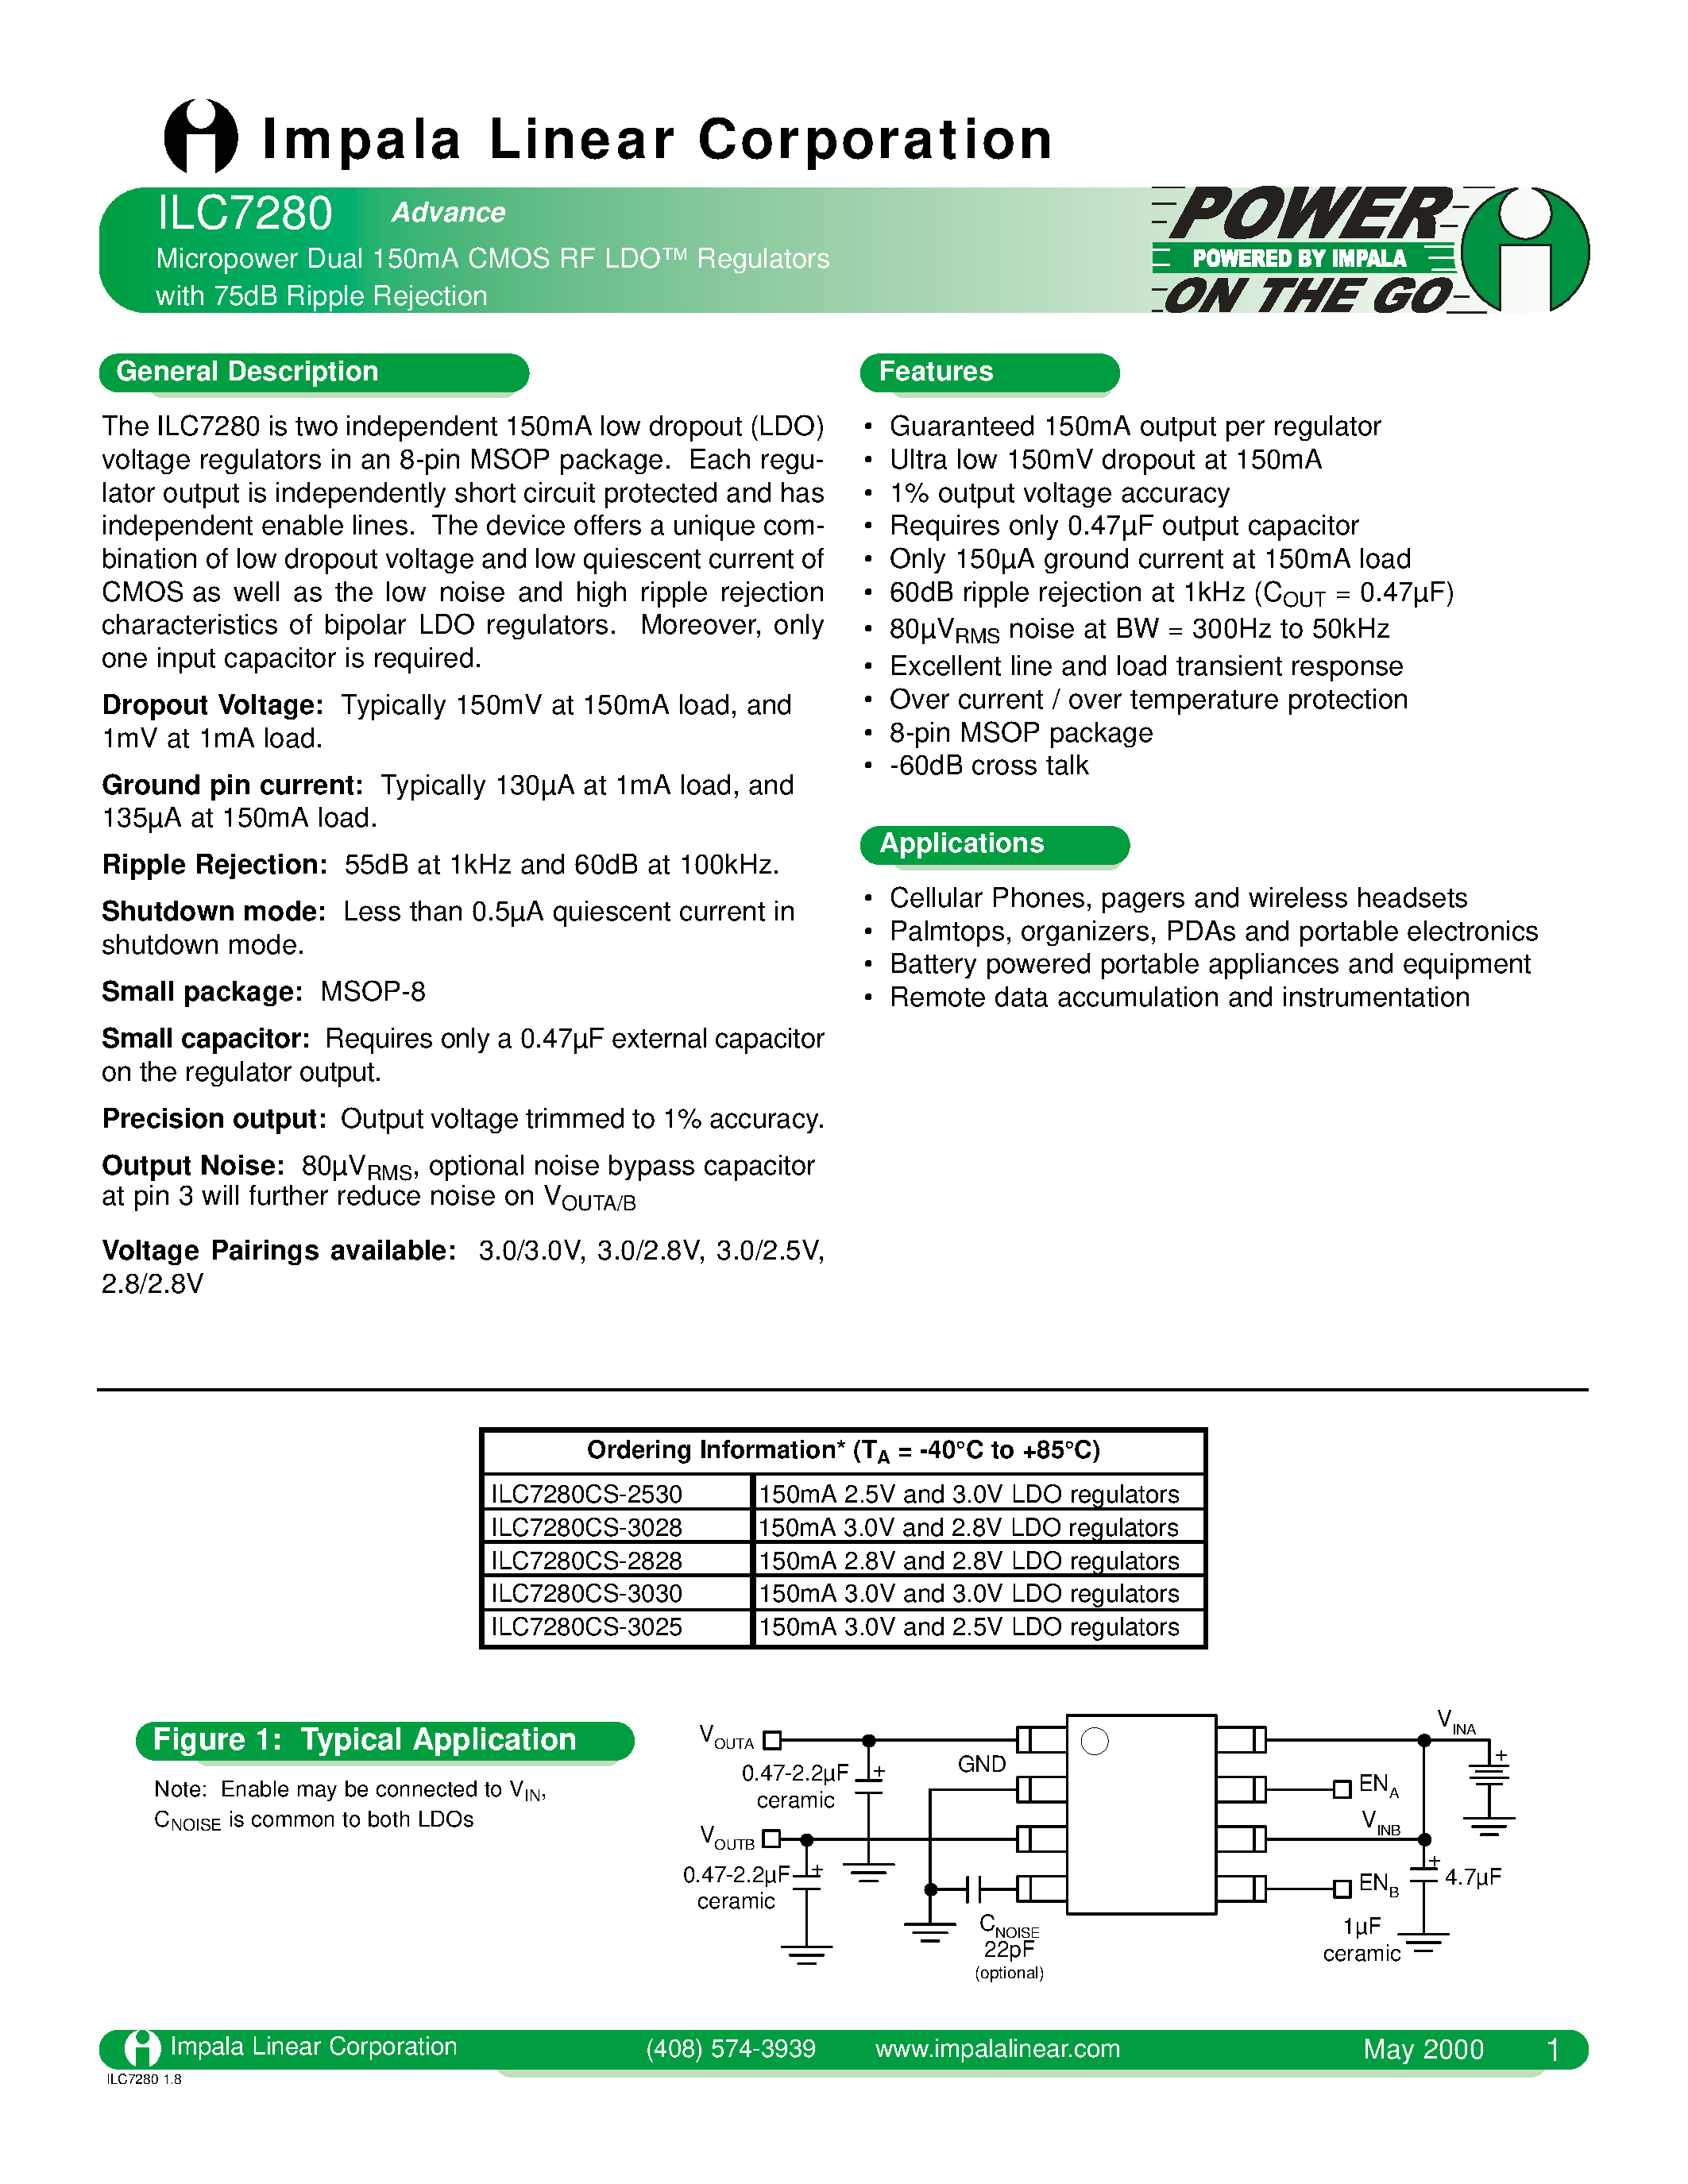 Datasheet ILC7280CS-2530 - MICROPOWER DUAL 150MA CMOS RF LDO REGULATORS WITH 75DB RIPPLE REJECTION page 1